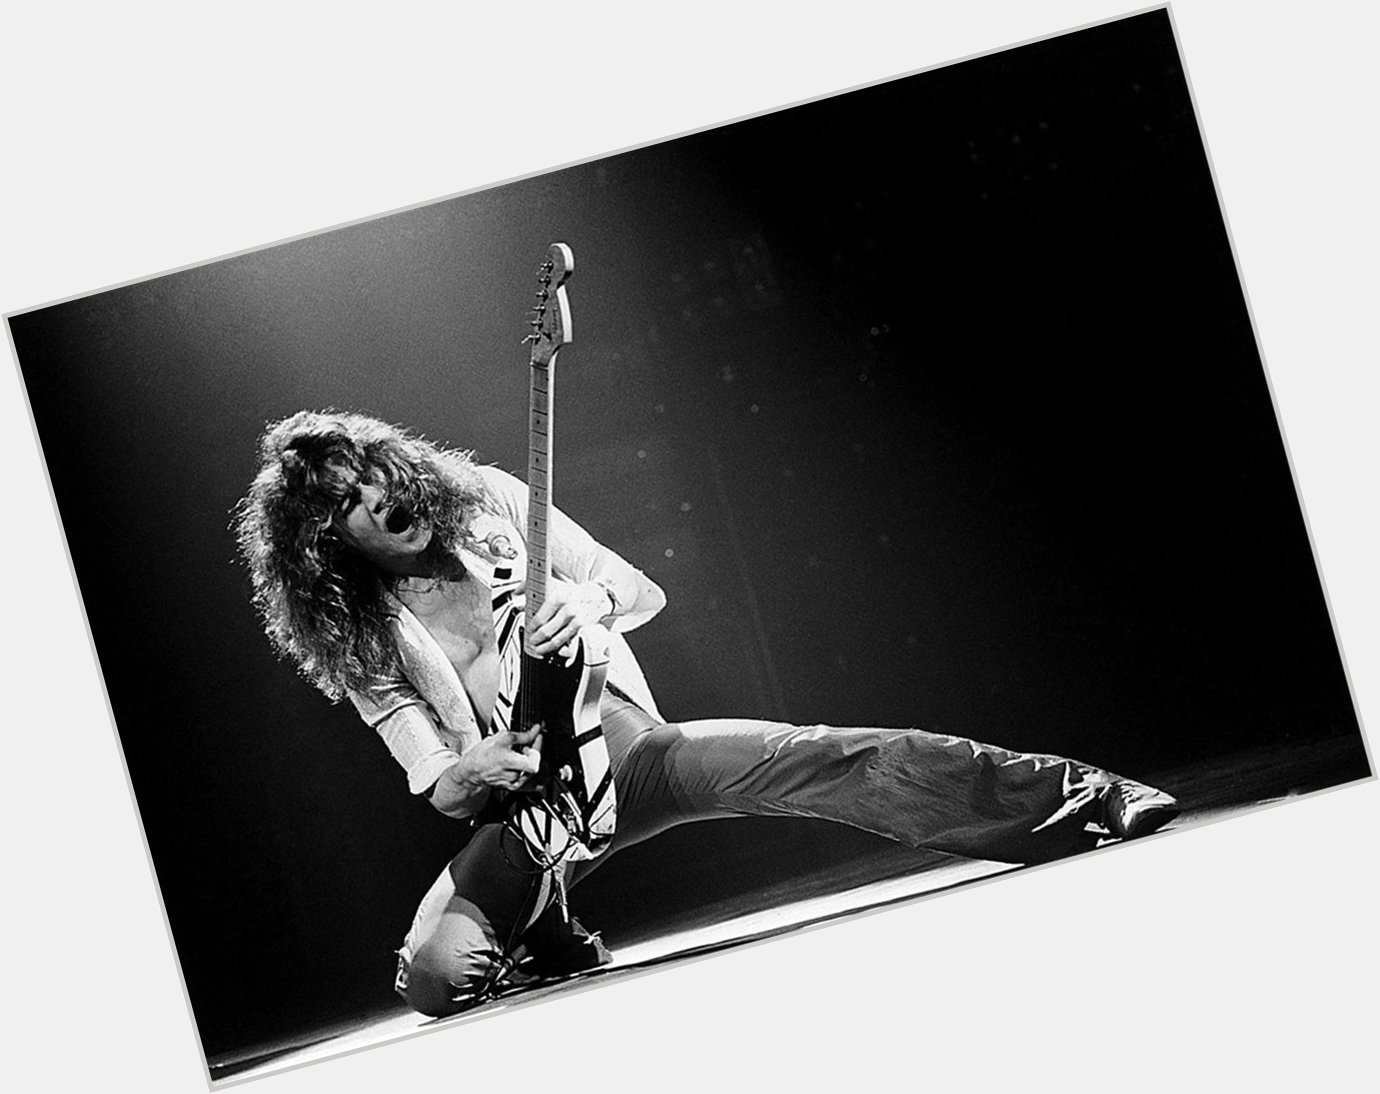 Happy birthday to guitar legand Eddie Van Halen - 63 today.   